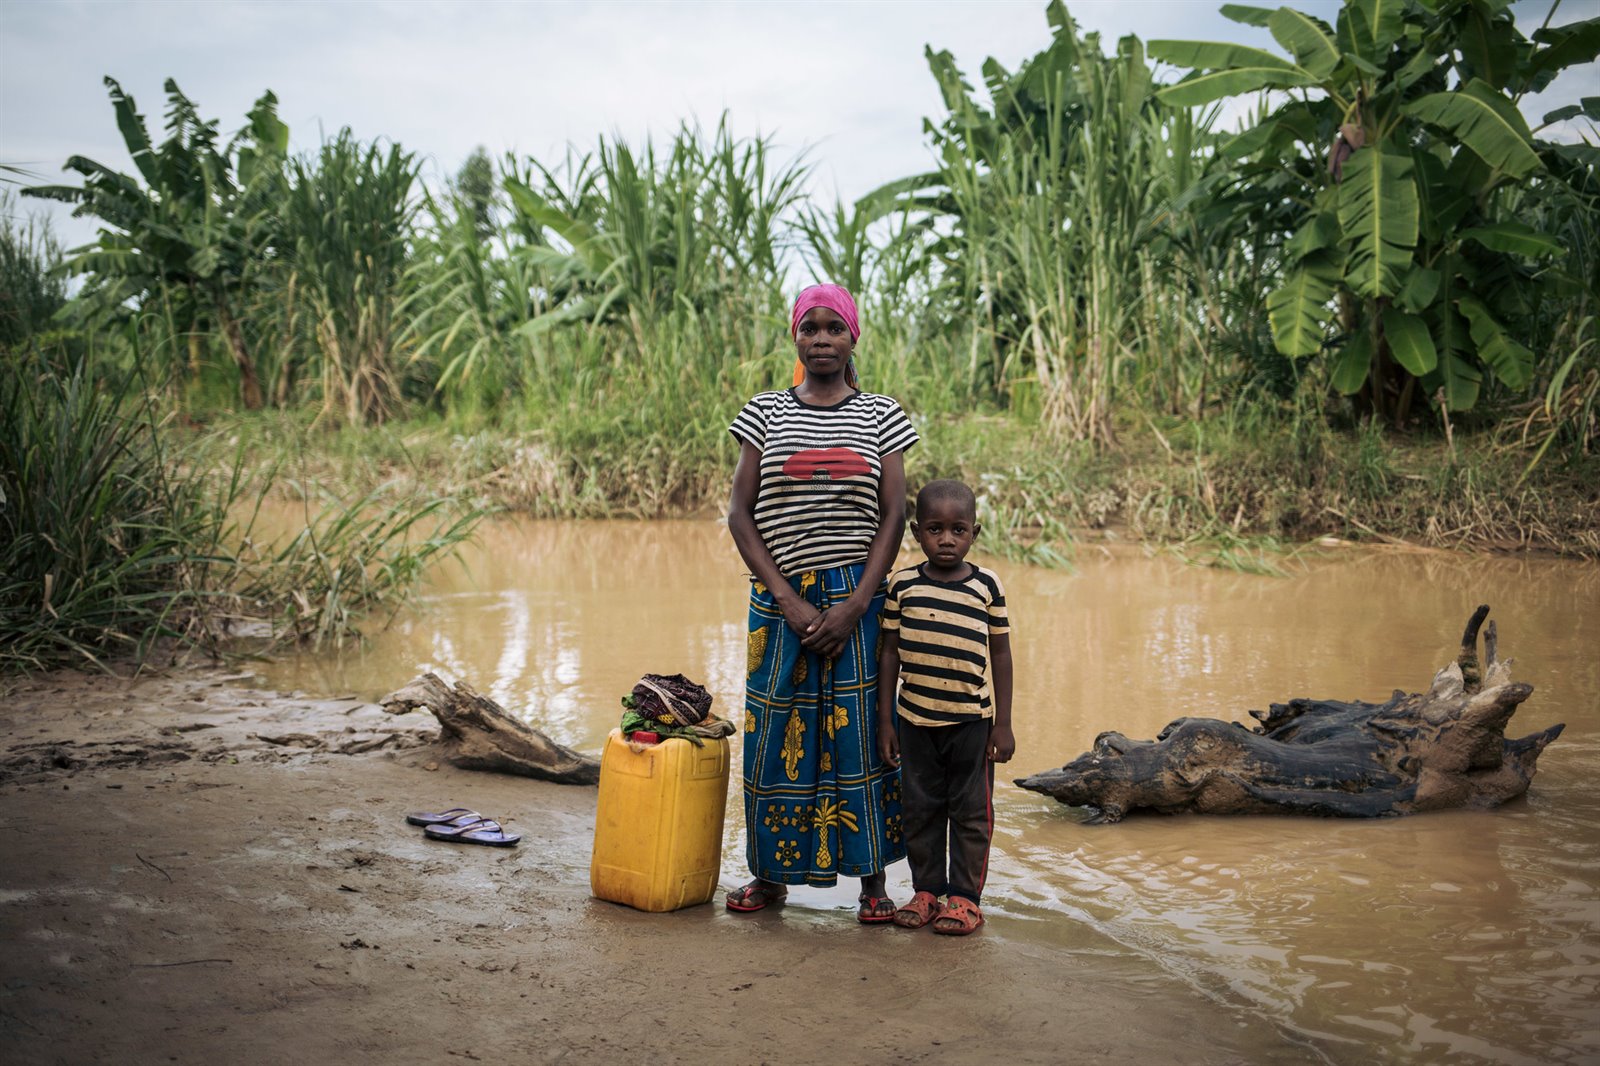 OxfamNovib_DRC_waterleiding_Alexis HuguetOxfamNovib_17988lpr